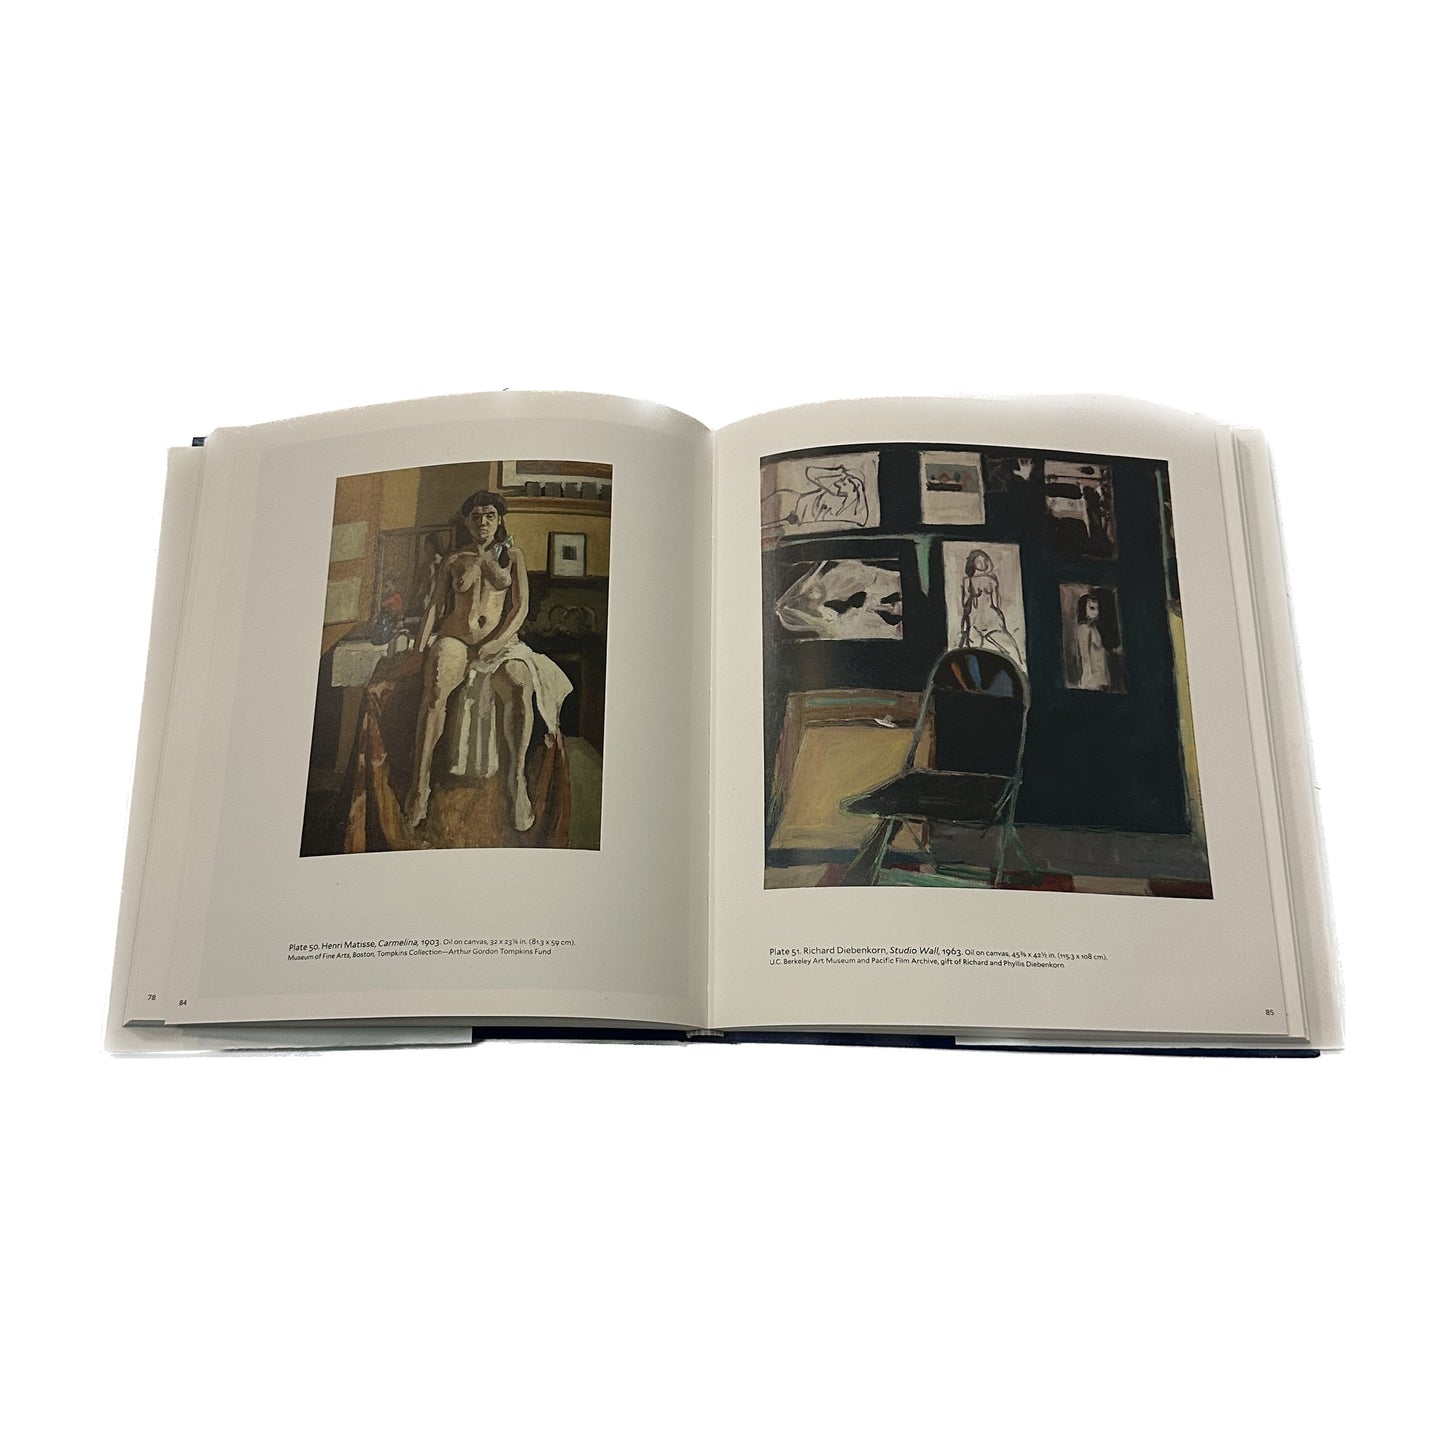 Matisse/Diebenkorn Table Book